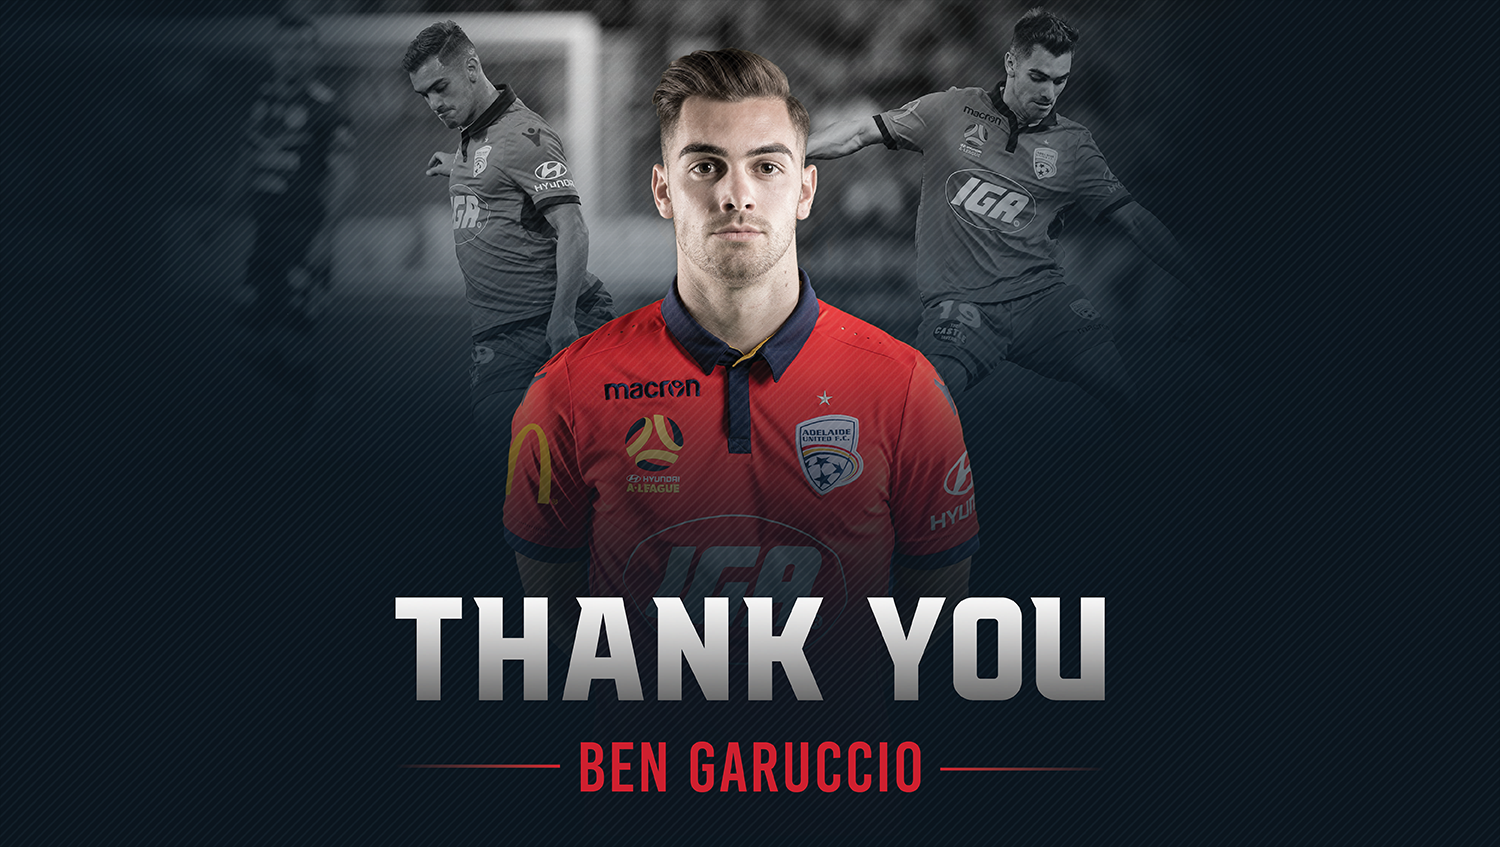 Garuccio departs Adelaide United for Scotland